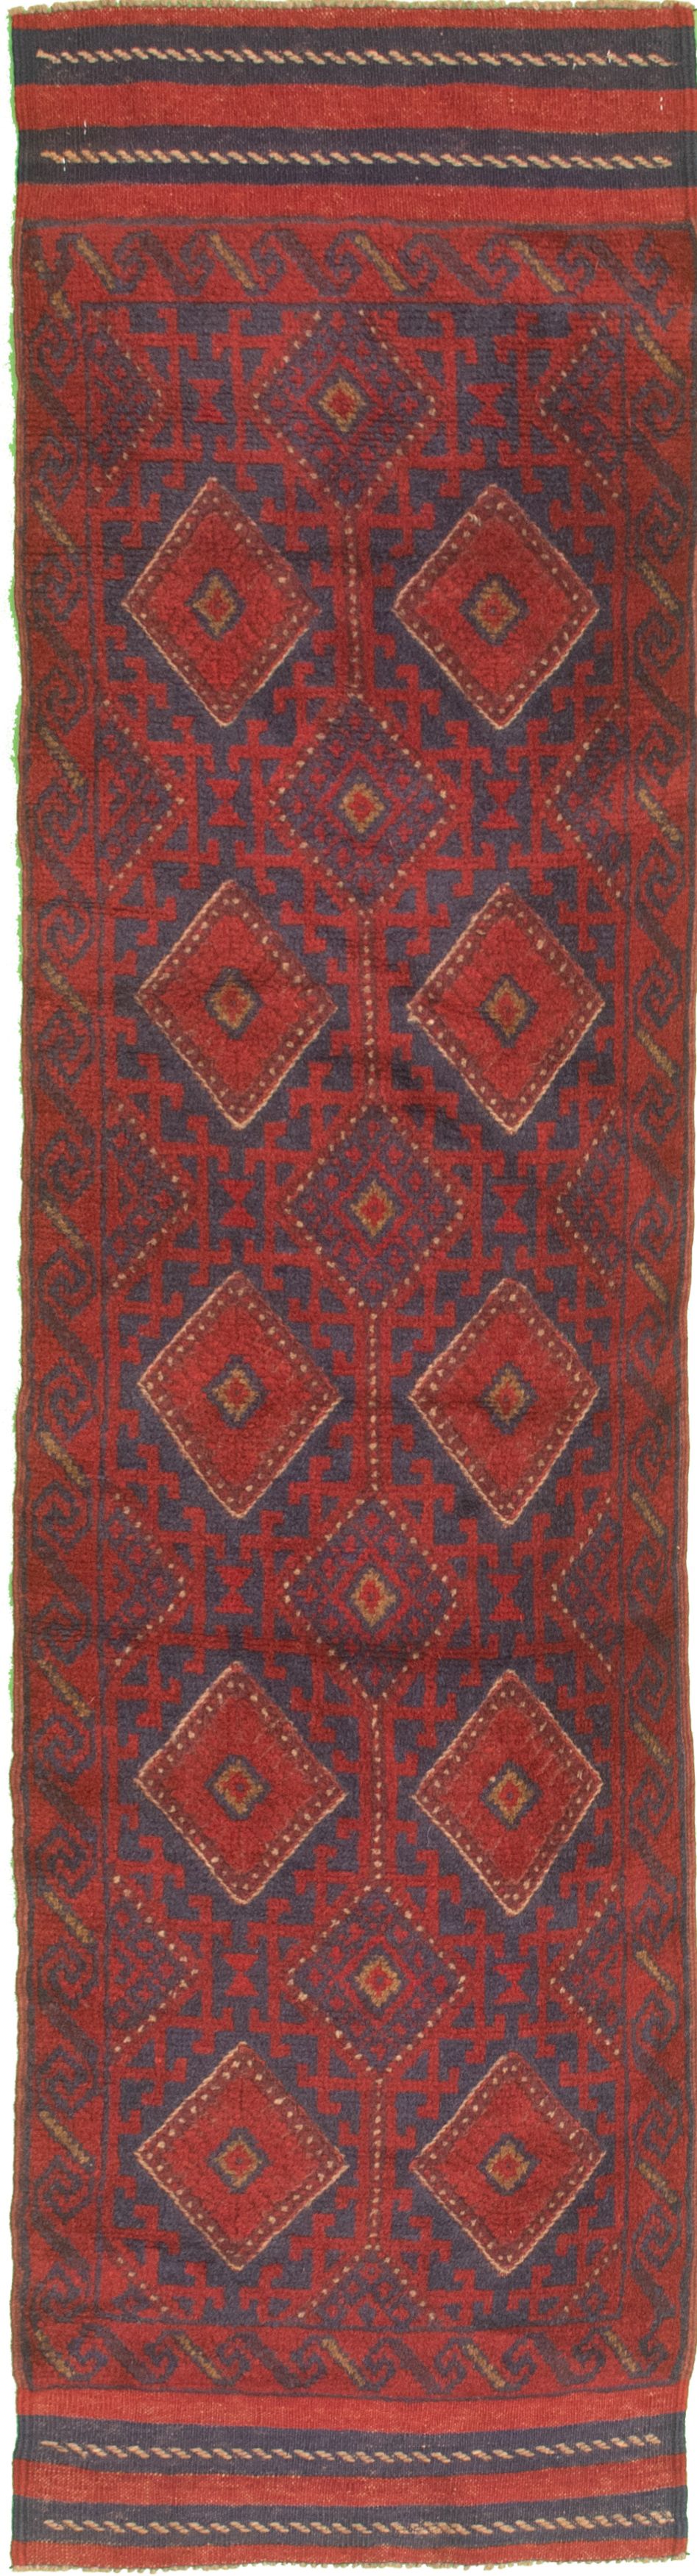 Hand-knotted Tajik Caucasian Red Wool Rug 2'1" x 7'10"  Size: 2'1" x 7'10"  